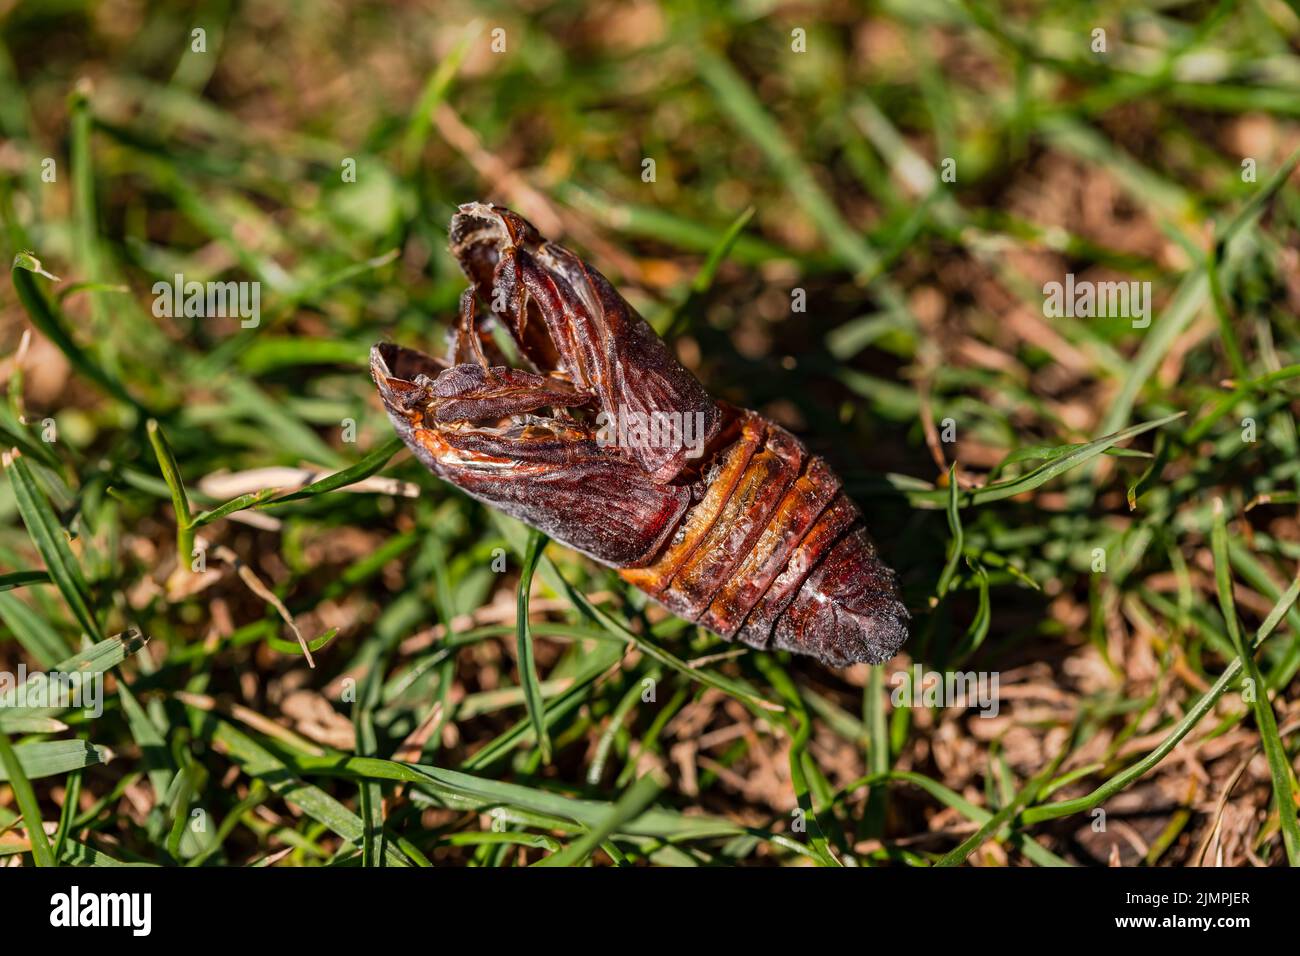 Concha de quitina seca de un insecto aislado en el jardín Foto de stock